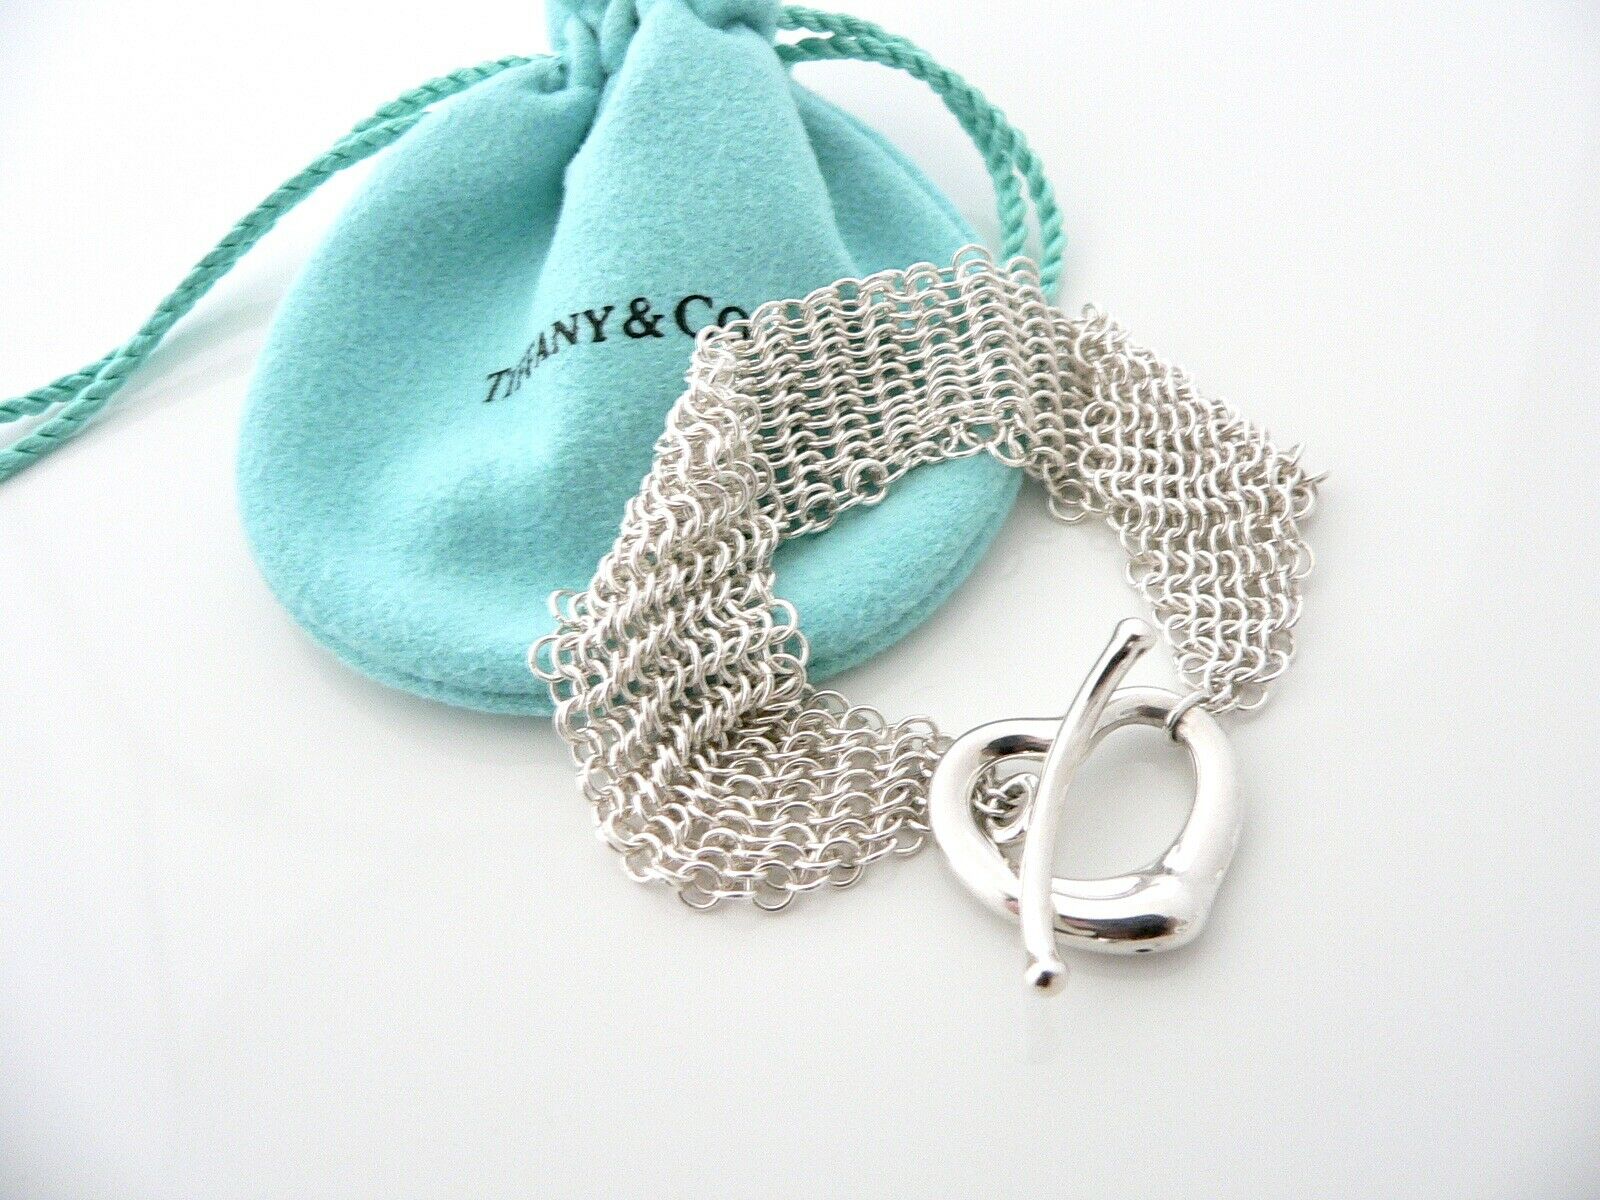 Elsa Peretti® Open Heart Bracelet